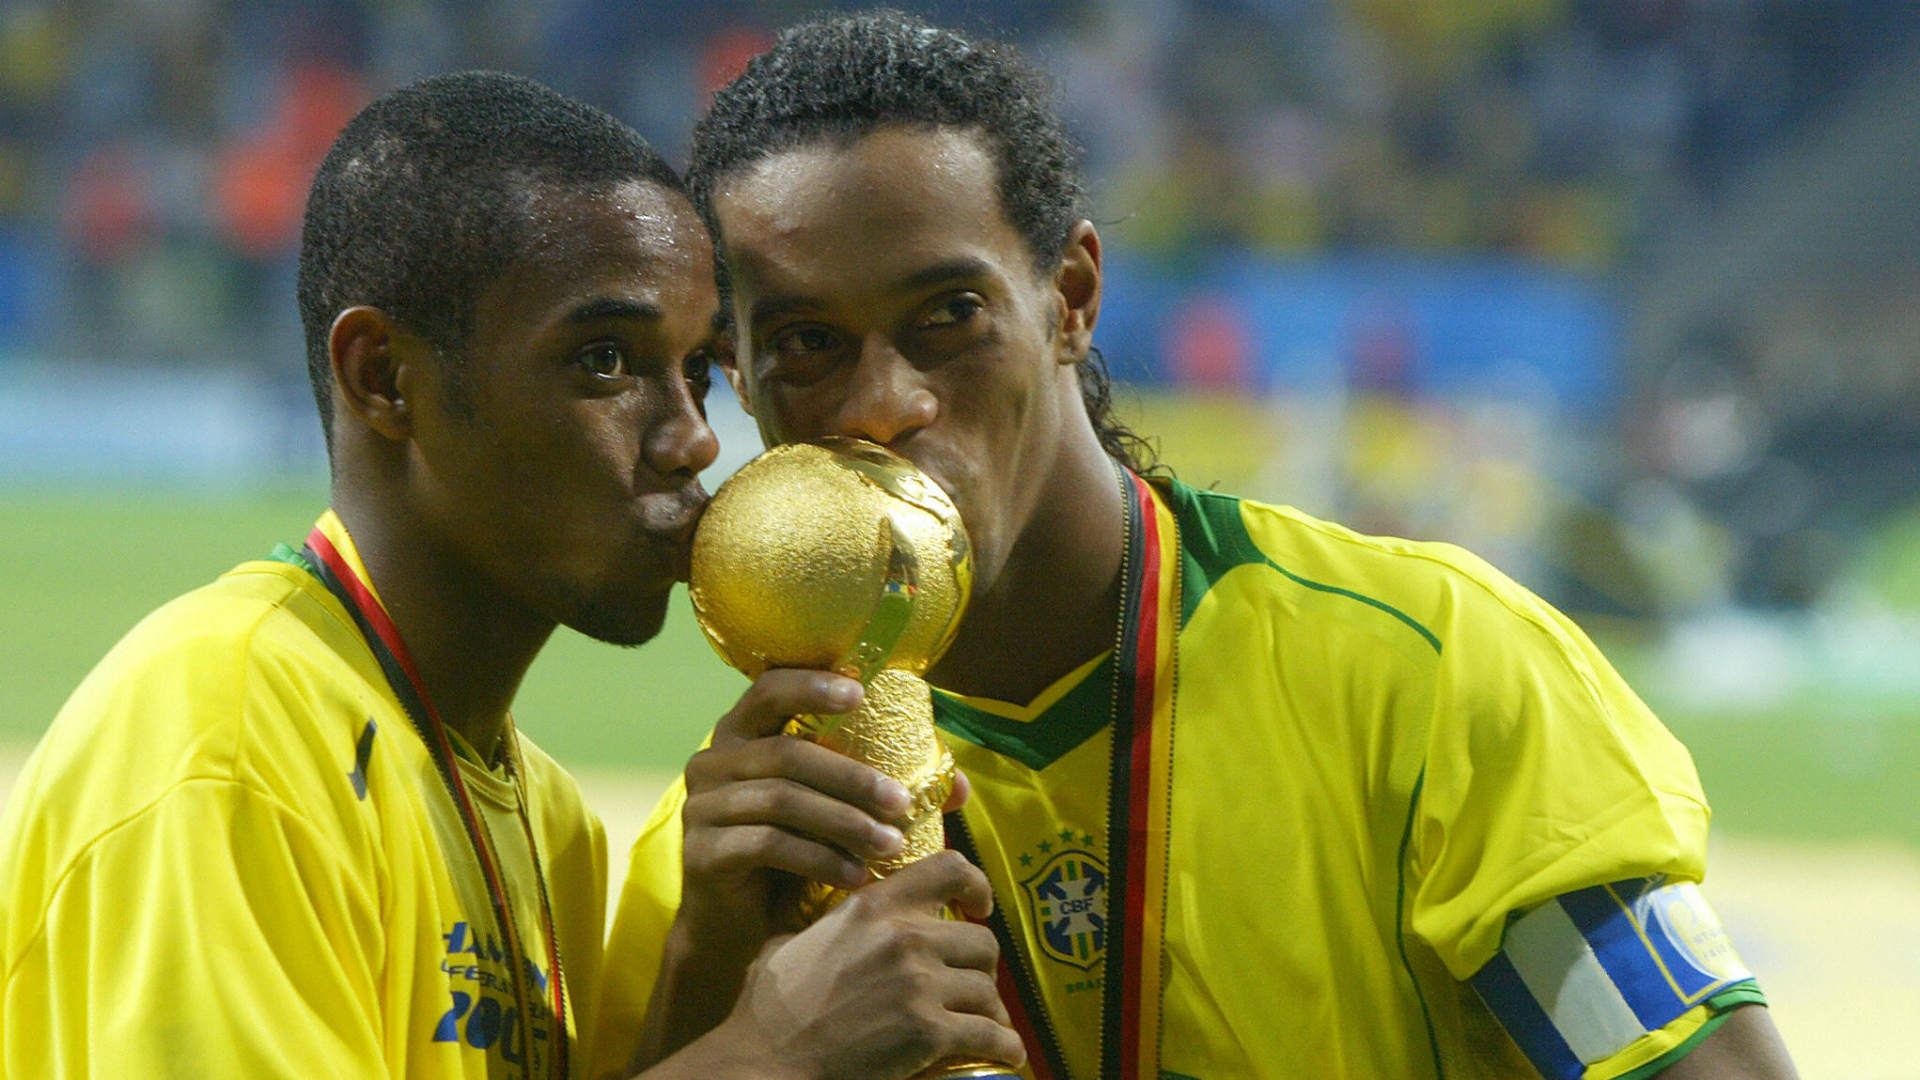 He did it his way - Ronaldinho's Brazil story | Goal.com